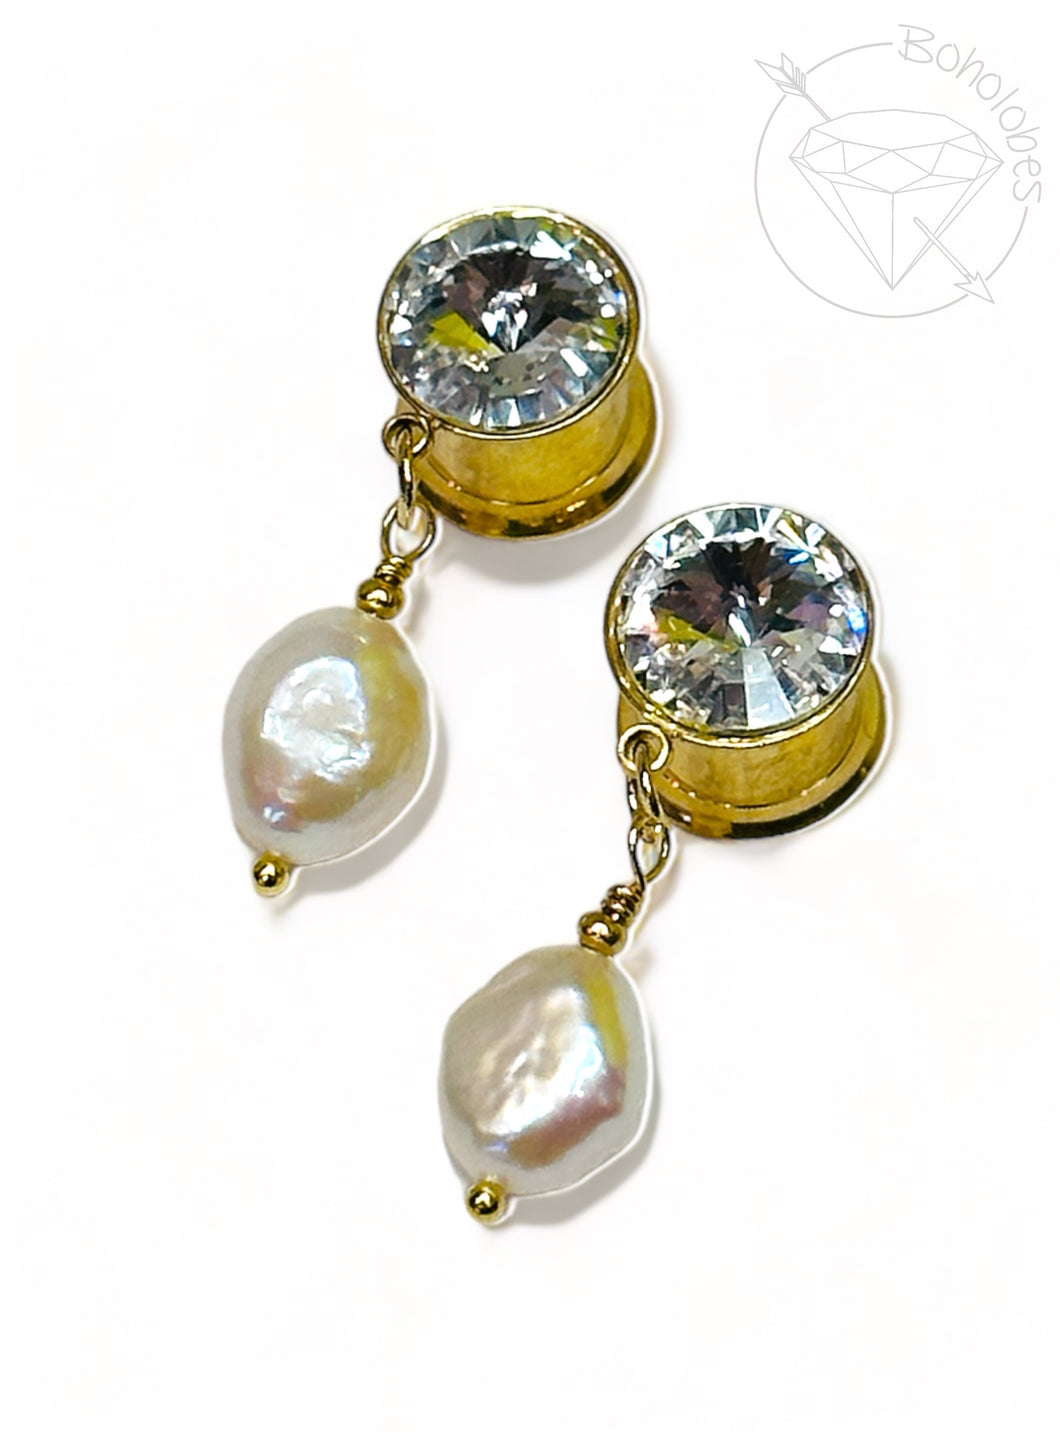 Crystal rhinestone rochelle pearl dangle hollow gold tunnels plugs: 2g 0g 00g